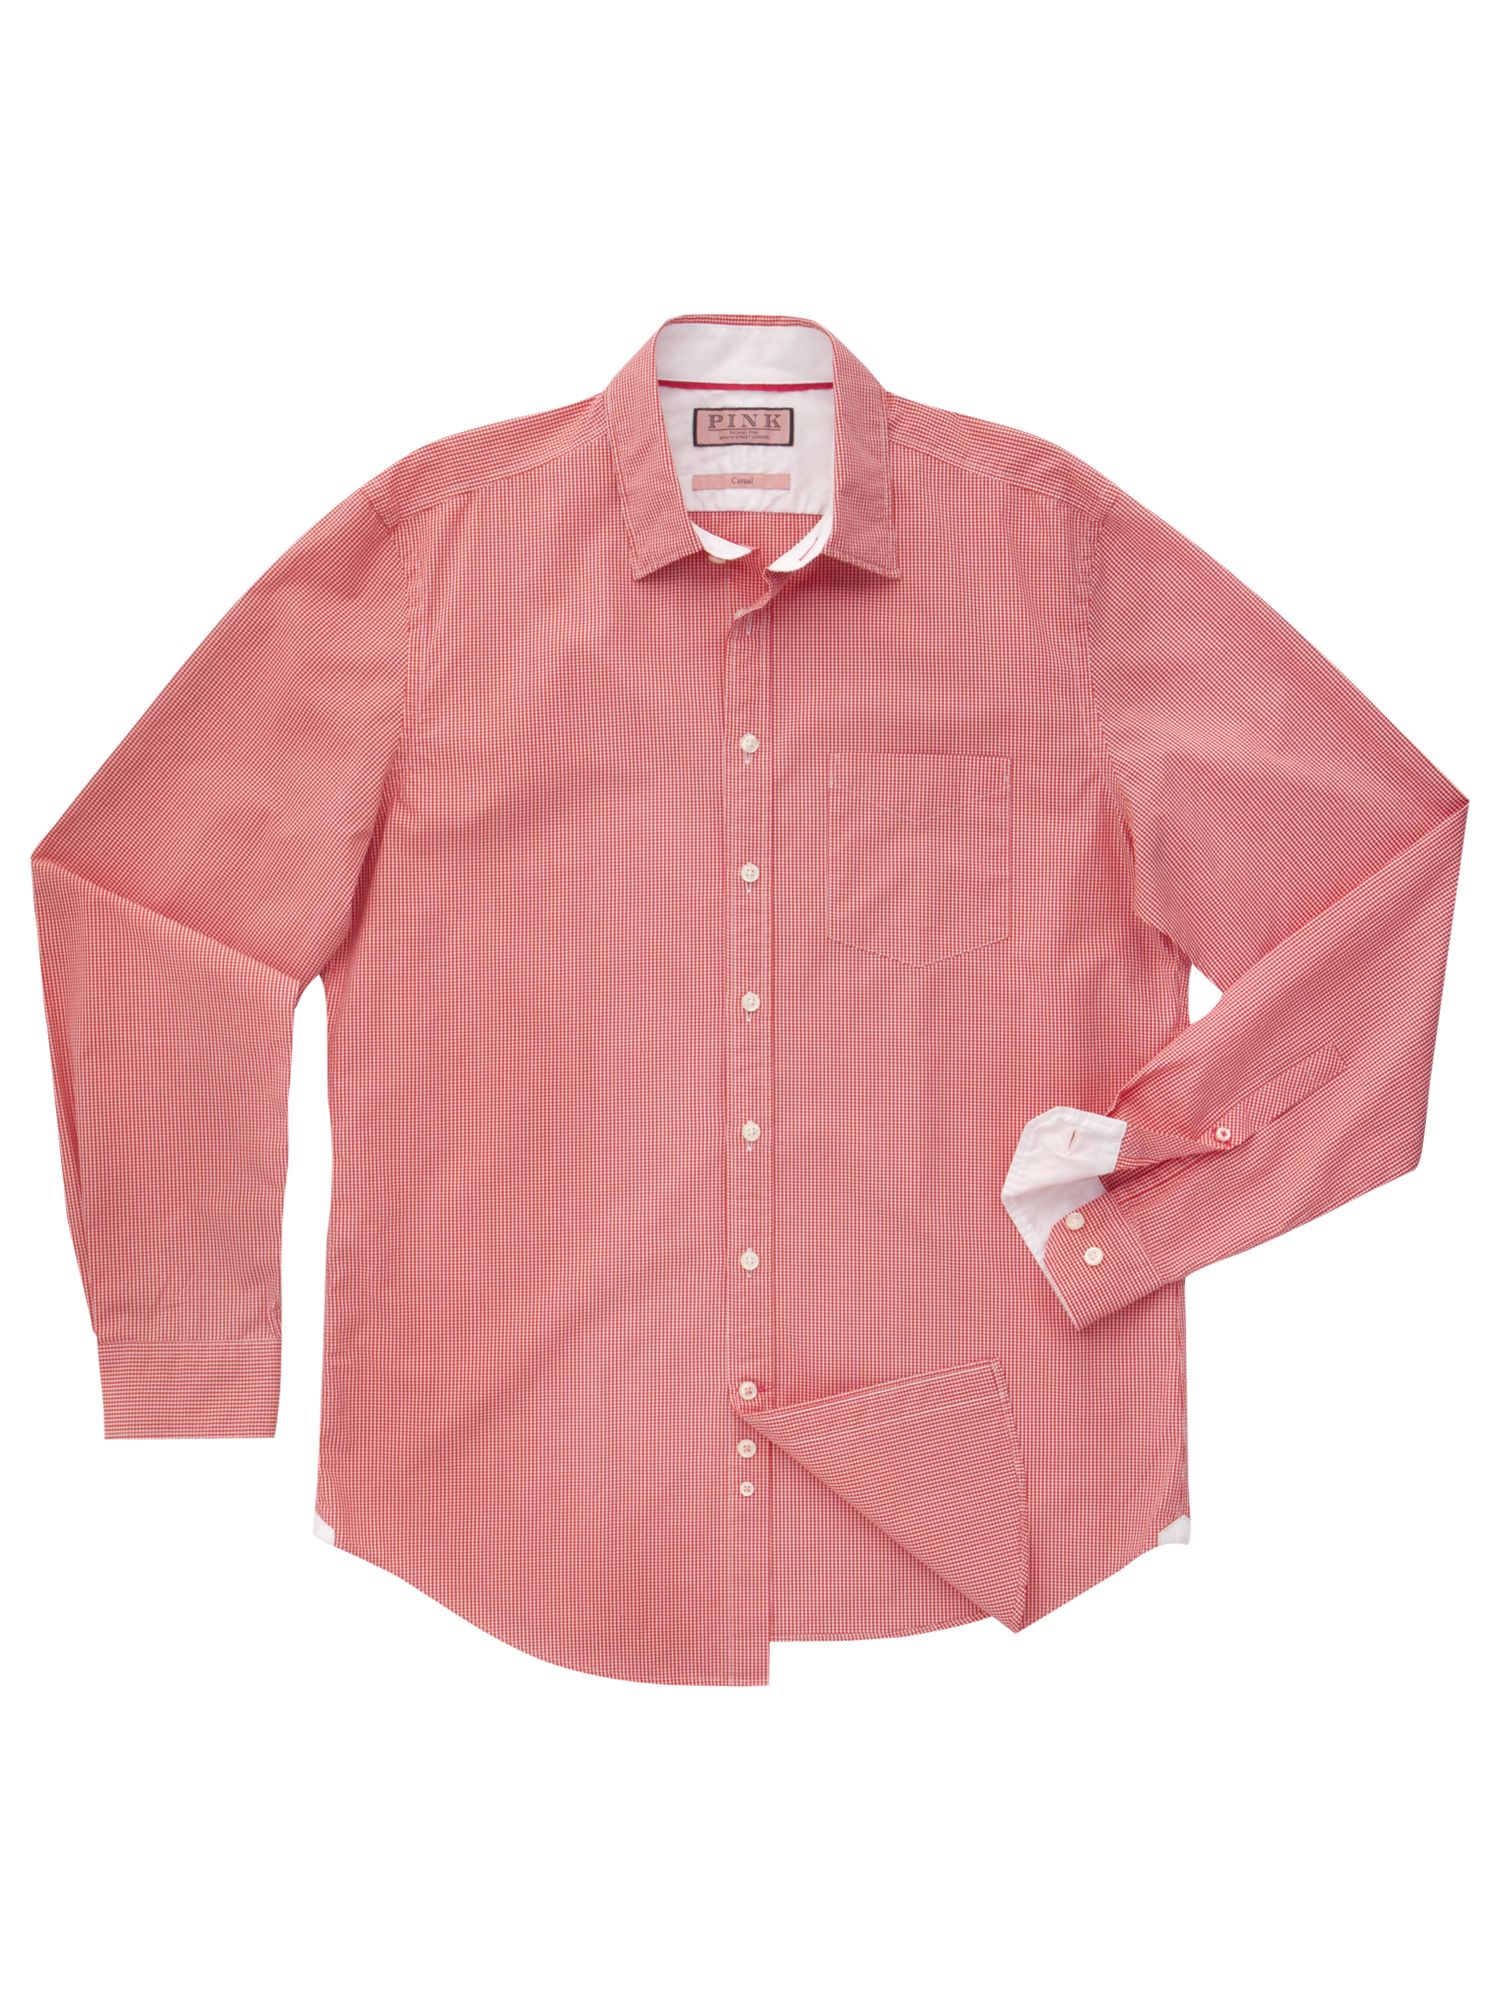 Thomas Pink Longitude Check Long Sleeve Shirt, Red/White